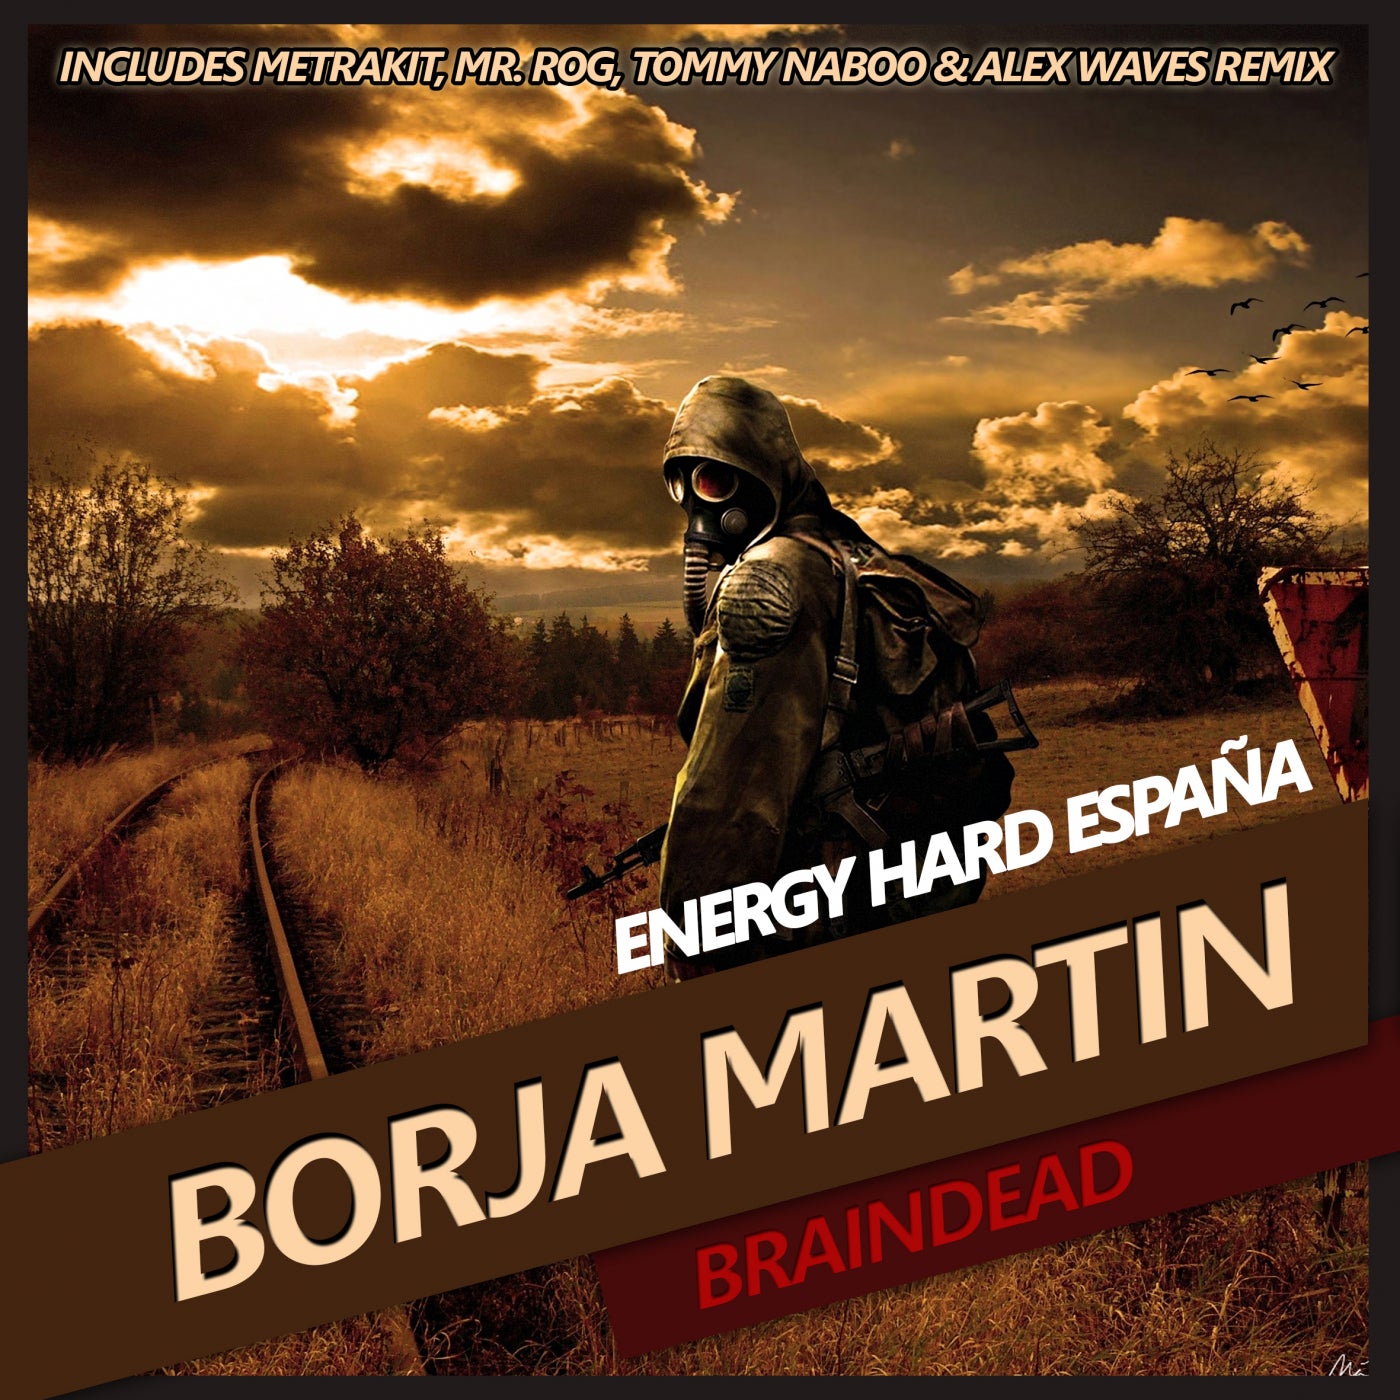 [EHE224] Borja Martin - Braindead 5de60327-a8bb-418d-a621-efd08e0ce2f8